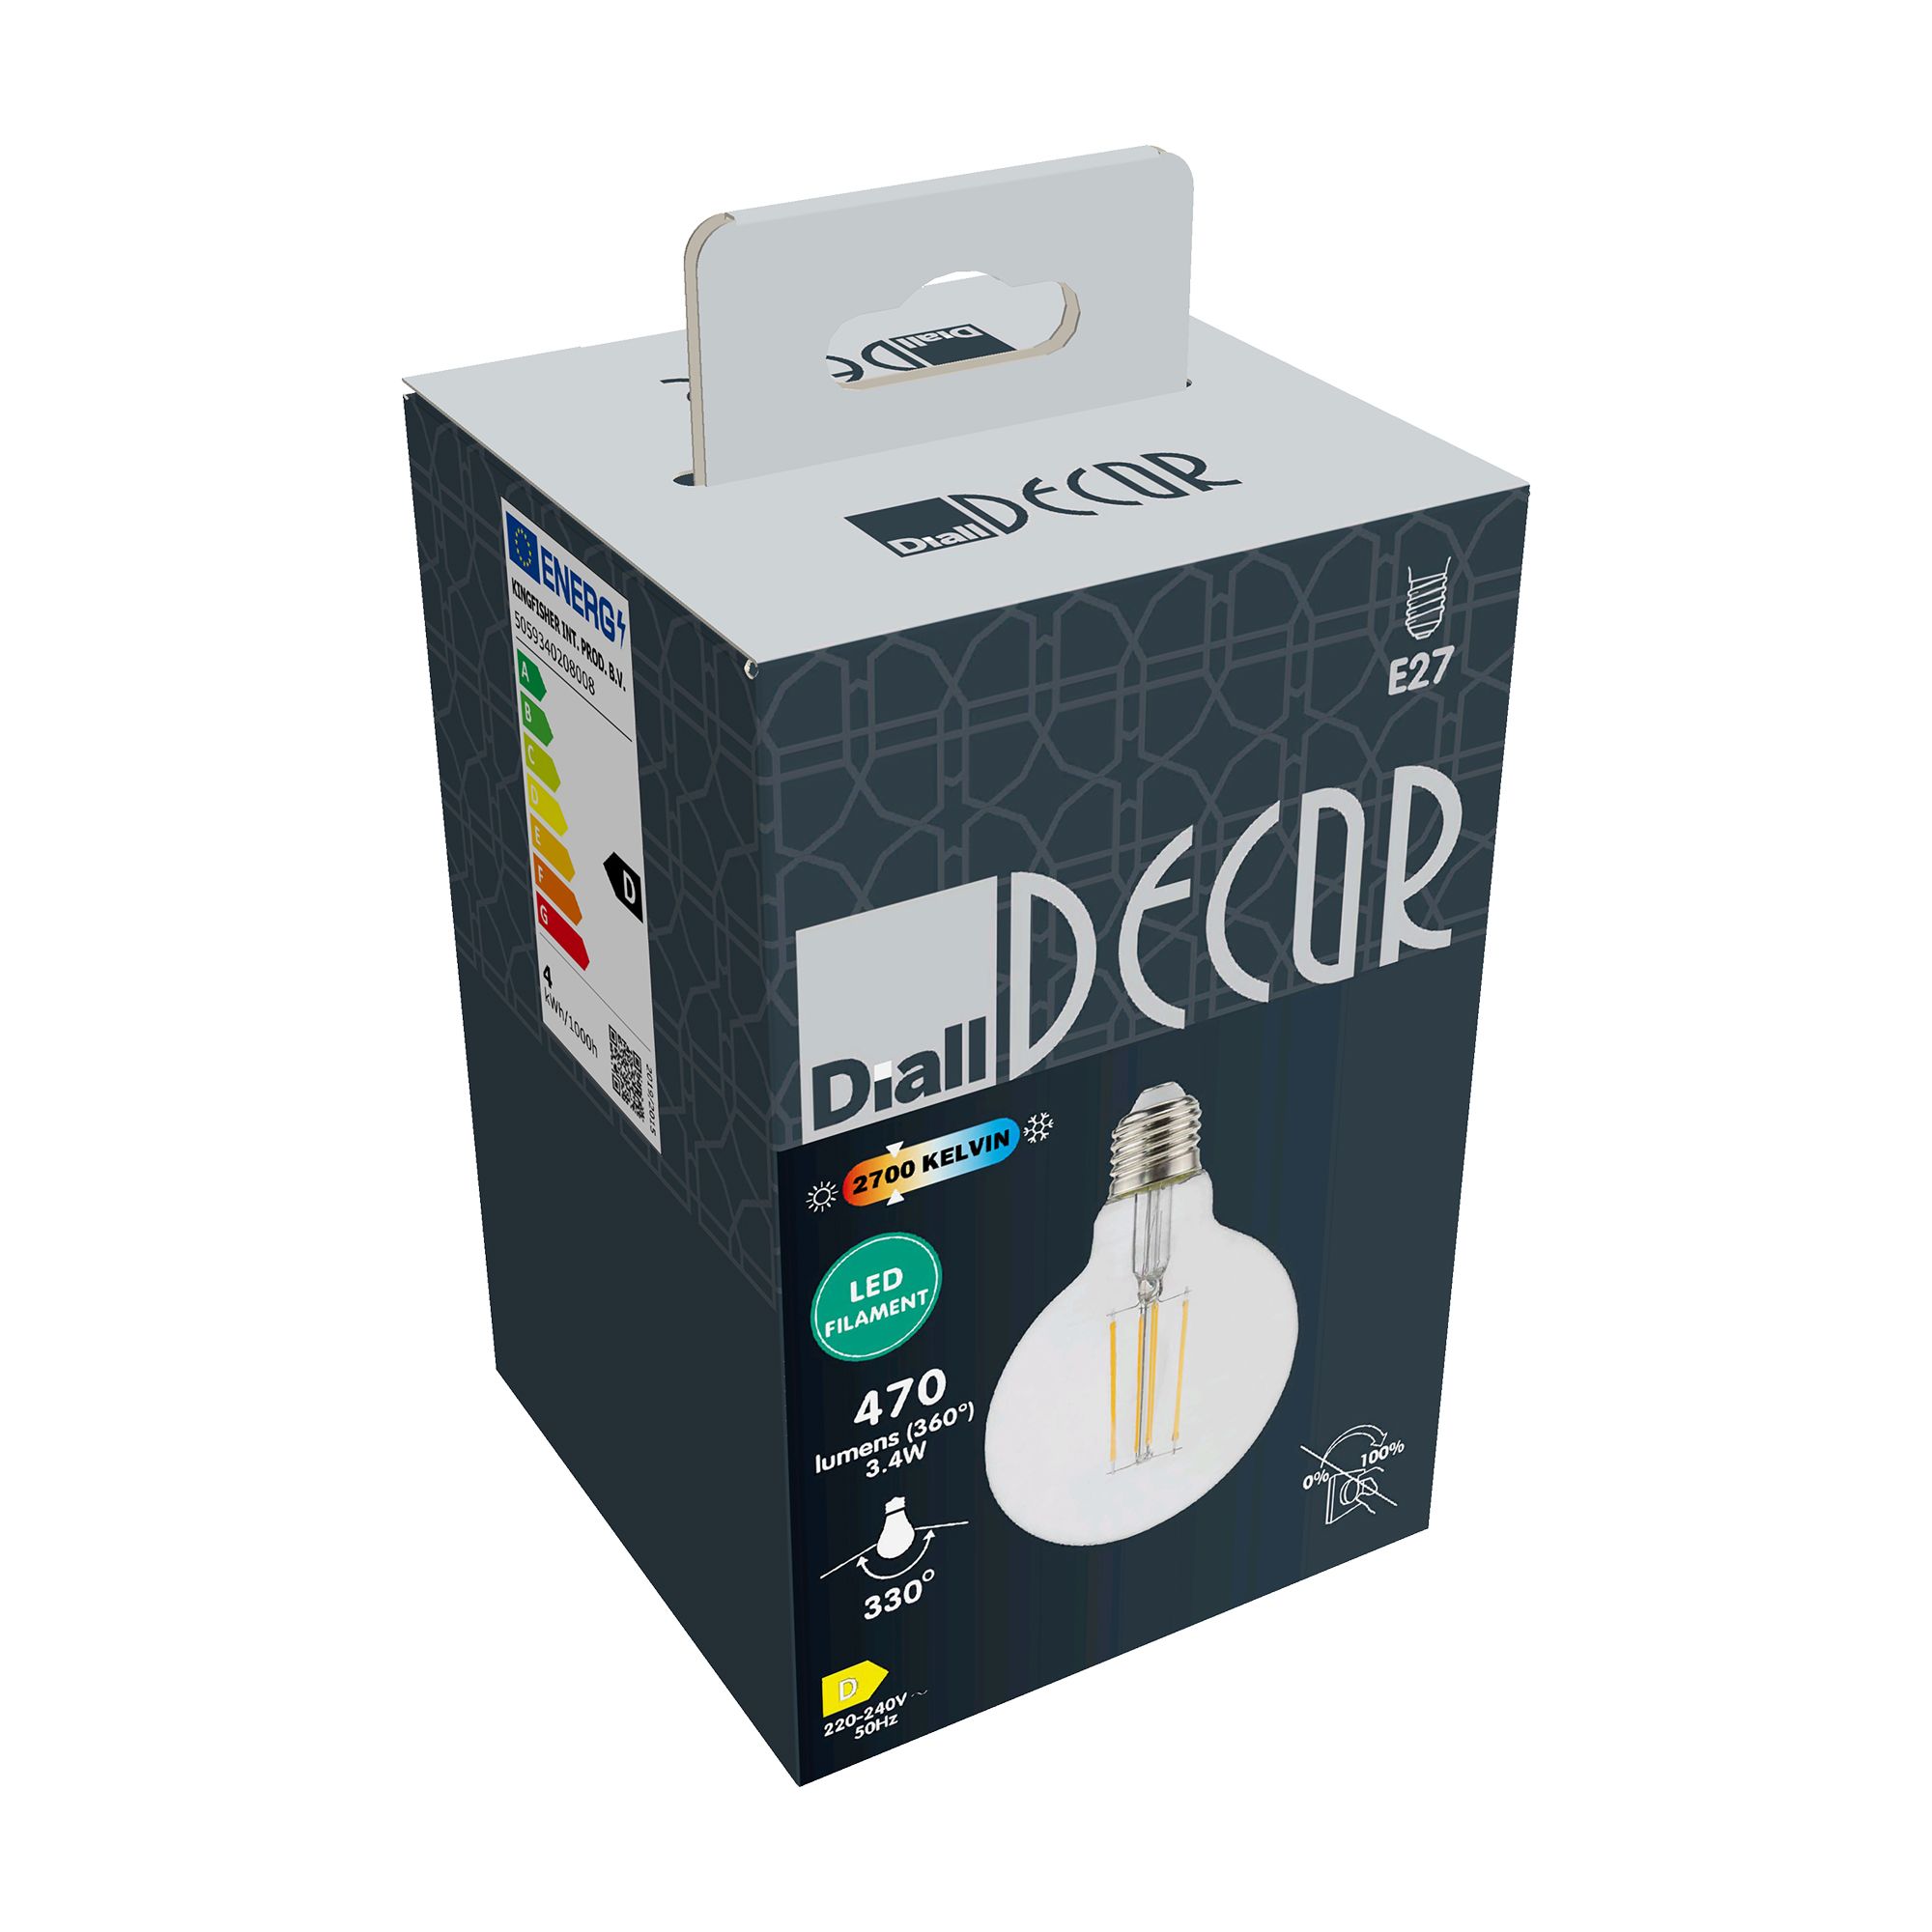 | E27 bulb DIY Light 3.4W white B&Q Globe LED Clear Warm Filament G95 at 470lm Diall